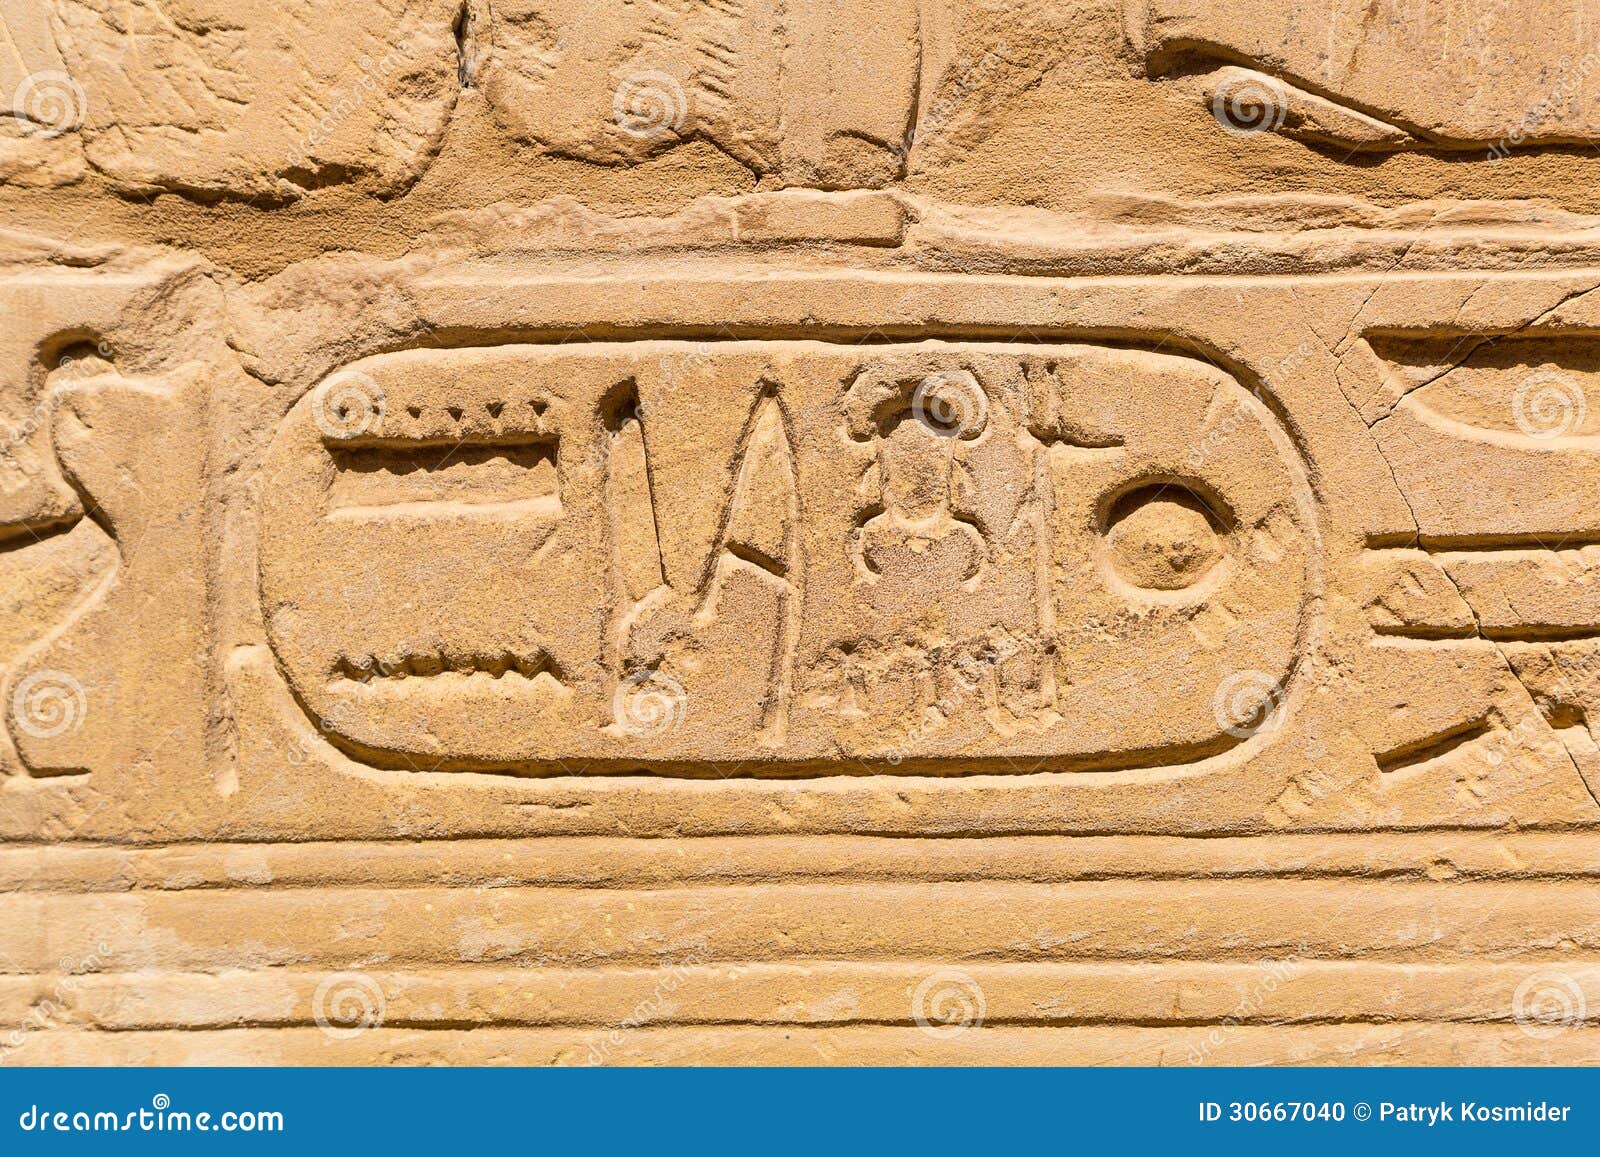 hieroglyphic of pharaoh civilization in karnak